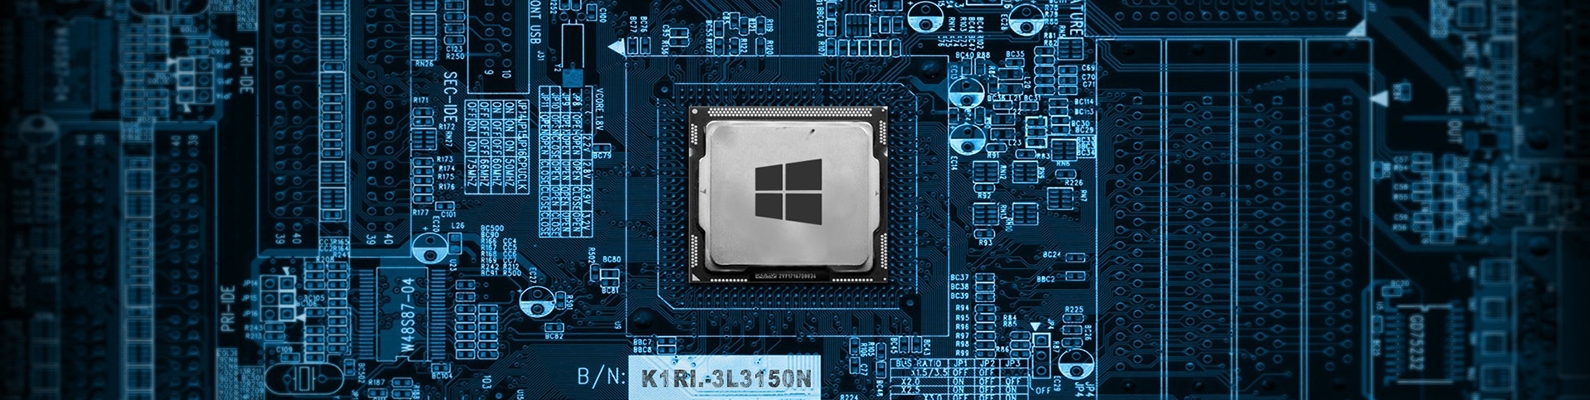 processor, wallpaper, tecnology, windows 10, desktop, blue, windows logo